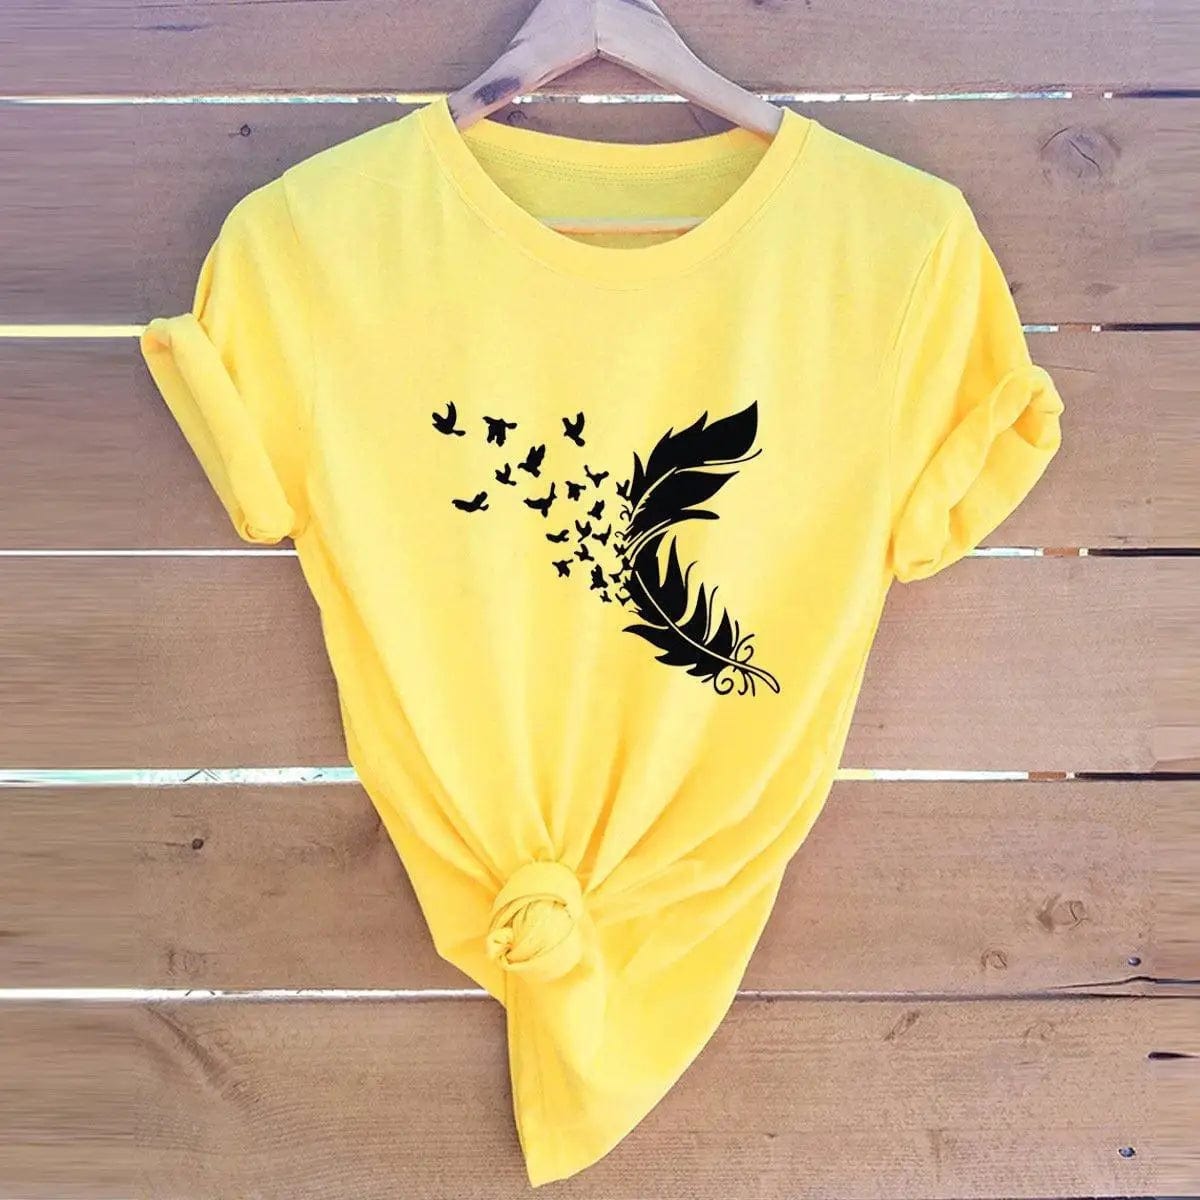 LOVEMI top Yellow / 2XL Lovemi -  Summer Plus Size Women Clothing New Feather Print T-Shirt